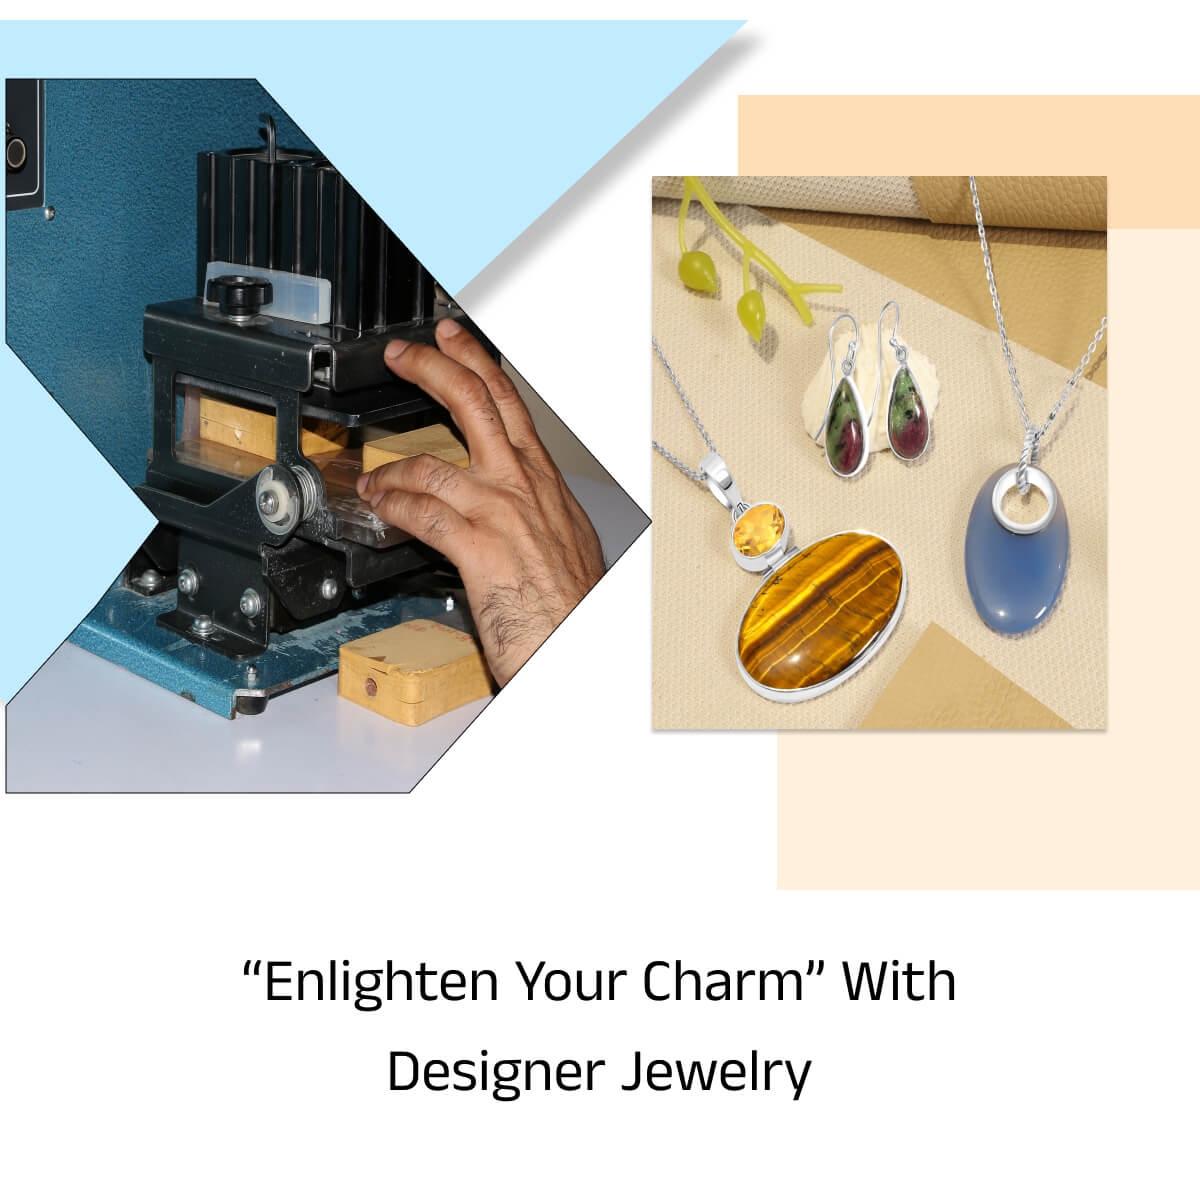 Designs of Designer Jewelry